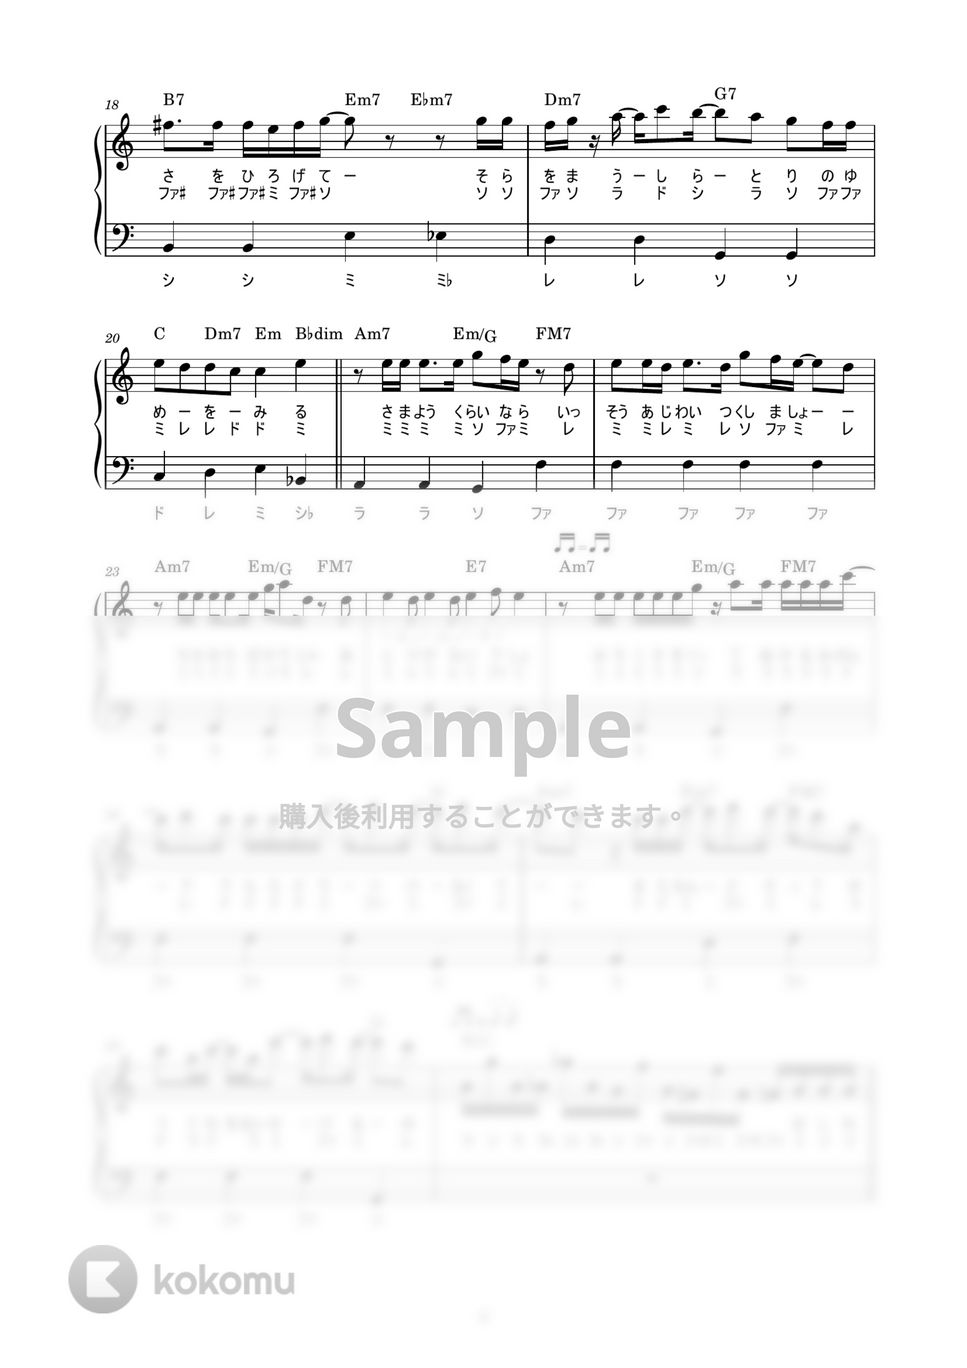 King Gnu - BOY (かんたん / 歌詞付き / ドレミ付き / 初心者) by piano.tokyo